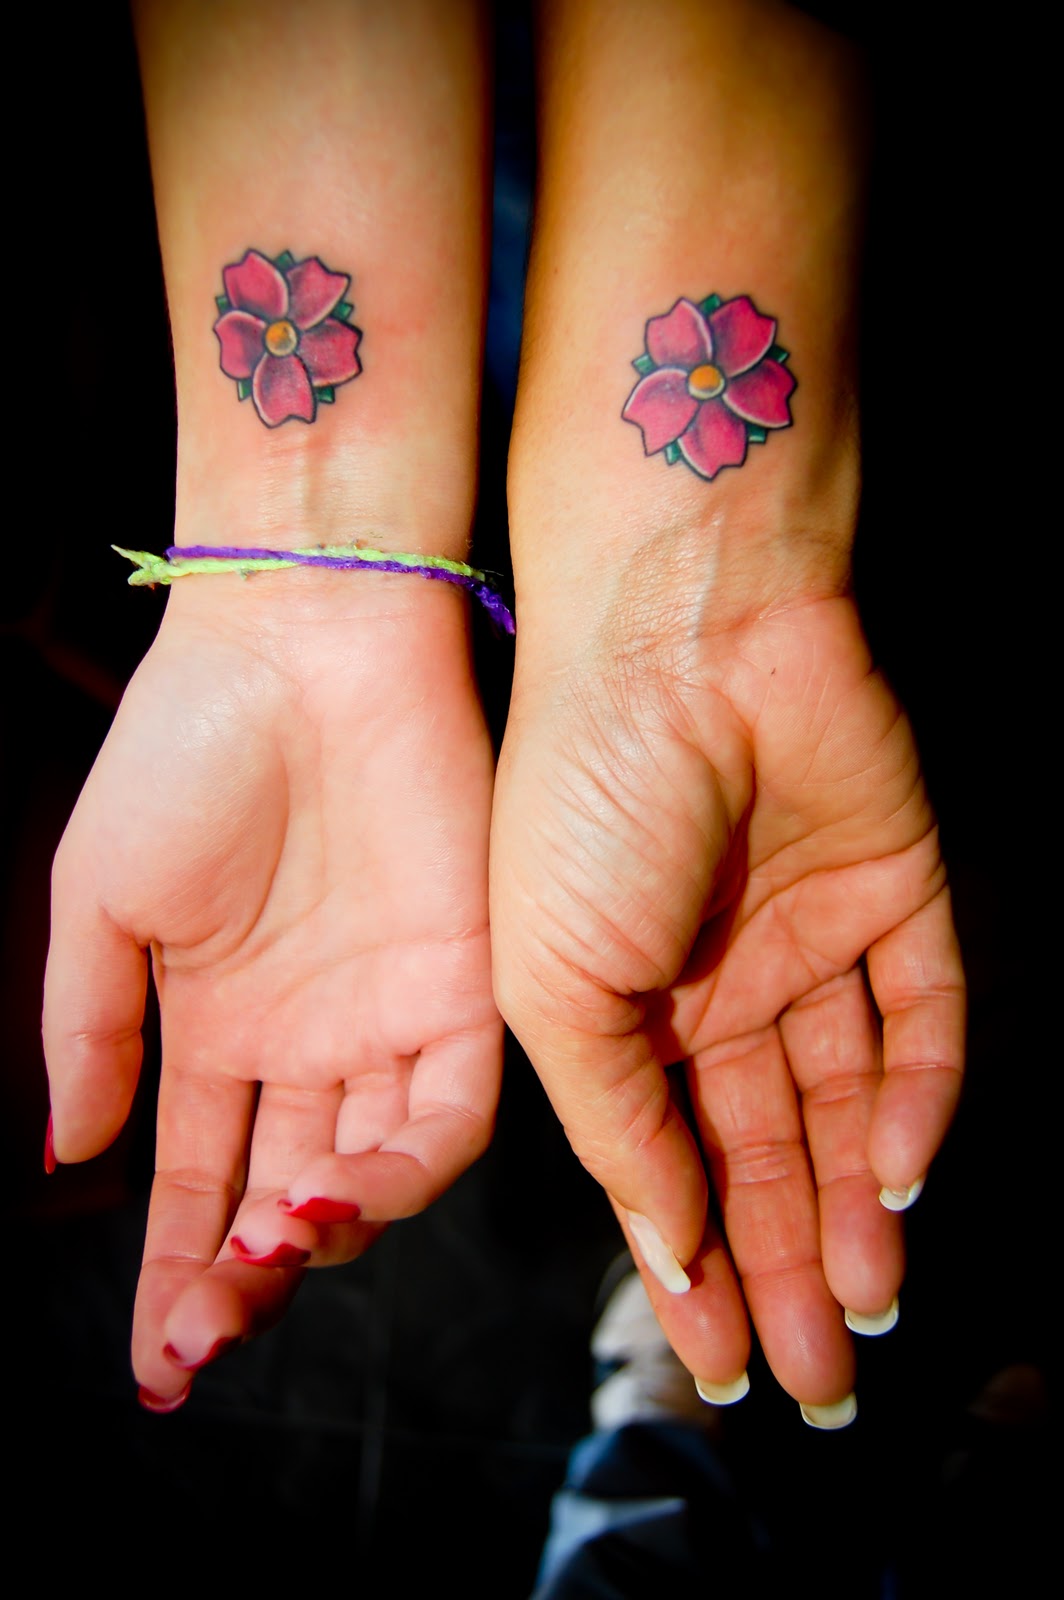 Bleachbottles friendship tattoo by f1n1x on DeviantArt